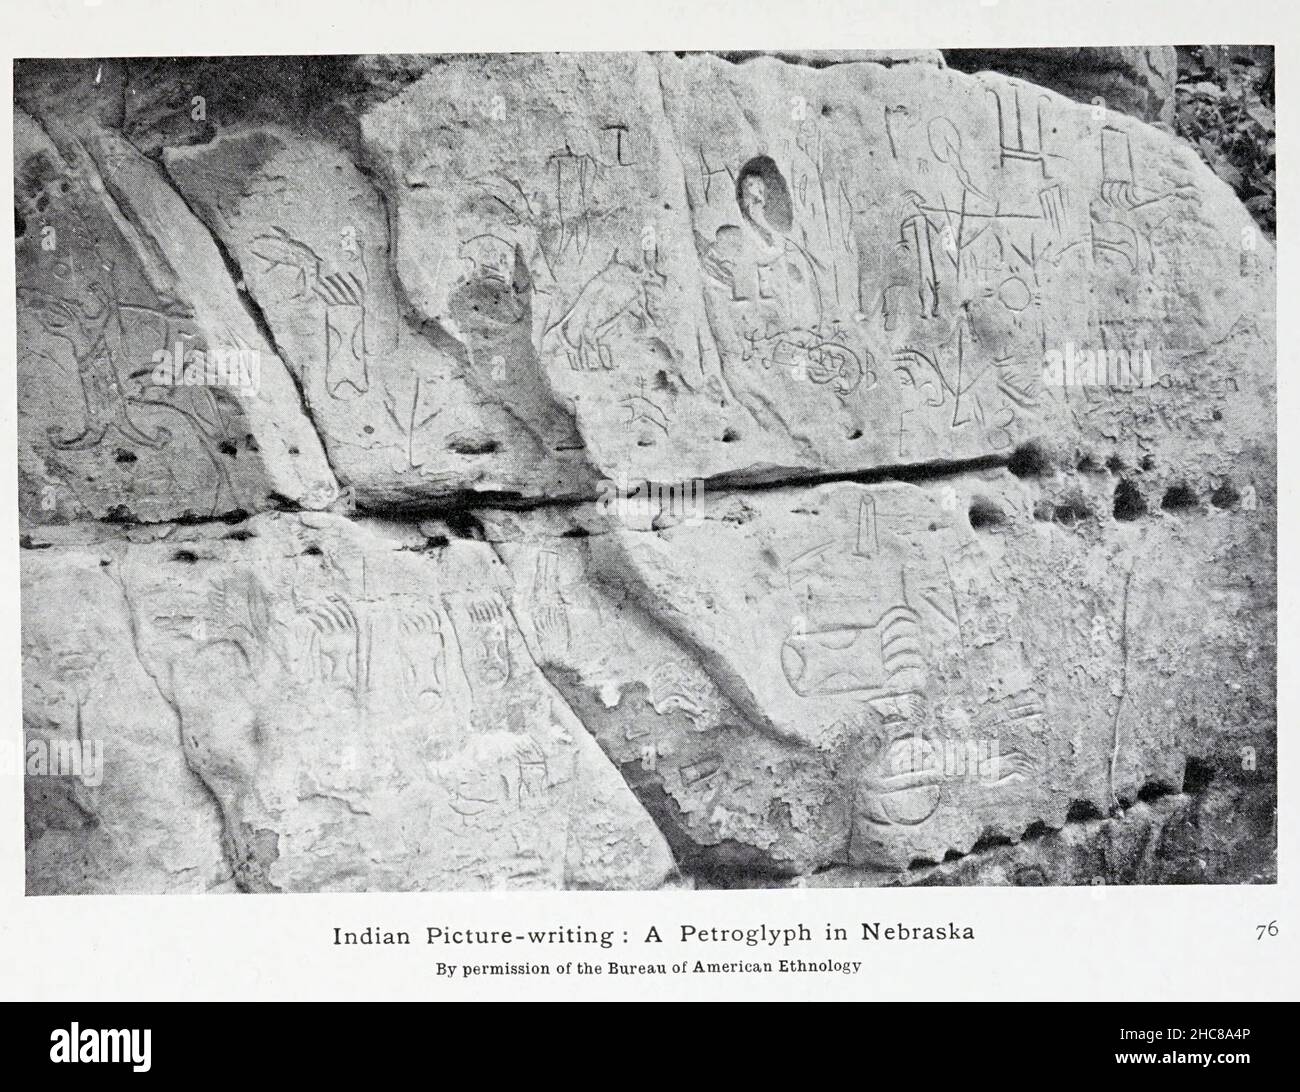 Indian Picture-writing : A Petroglyph in Nebraska from the Book ' The mythes of the North American Indians ' de Lewis Spence, publié à Londres par George G. Harrap & Company en 1912 Banque D'Images